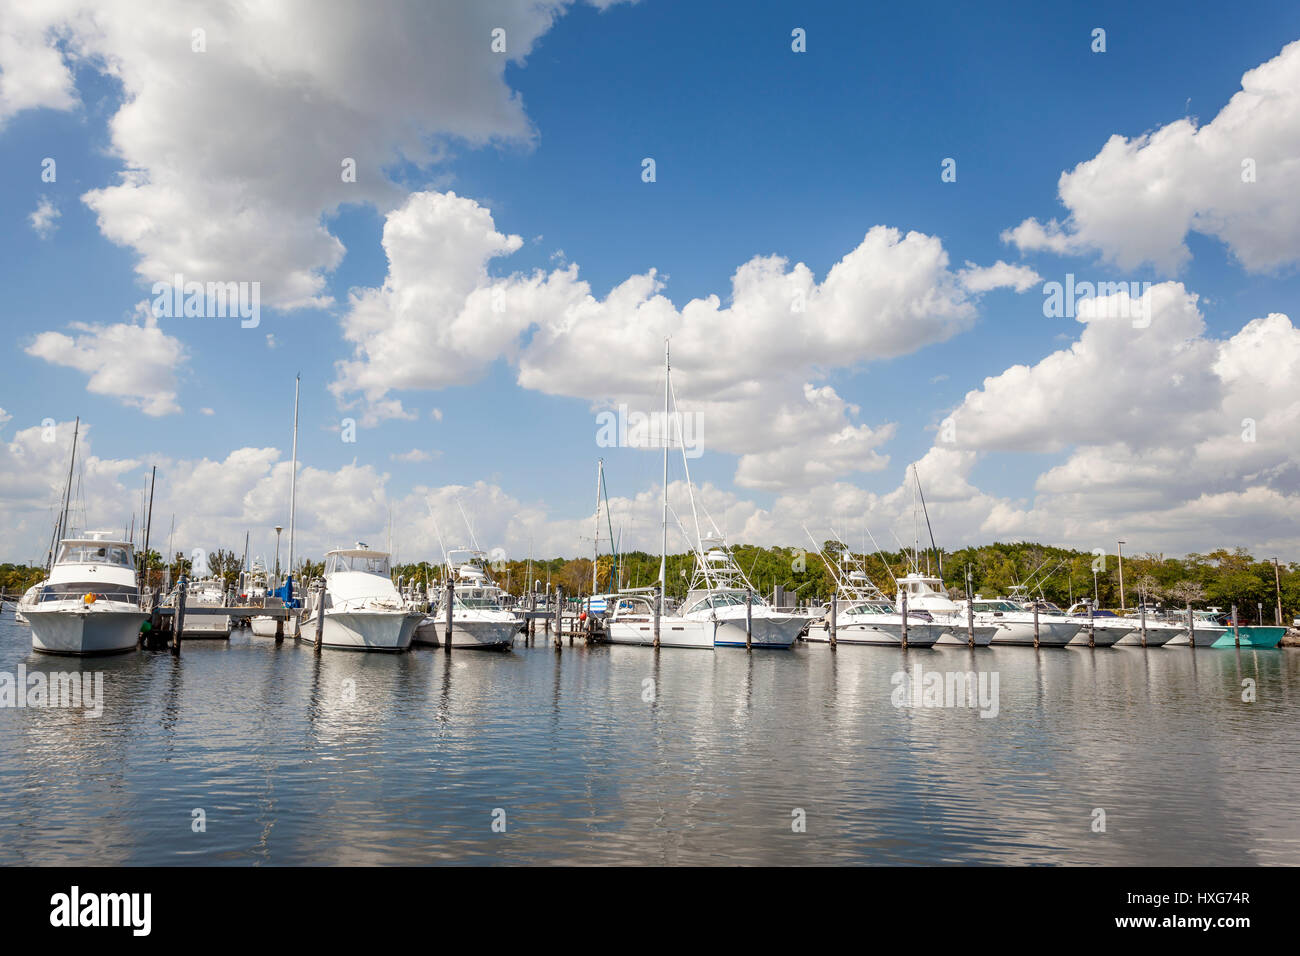 Yachts and fishing boats at the marina in Coral Gables. Miami, Florida, United States Stock Photo